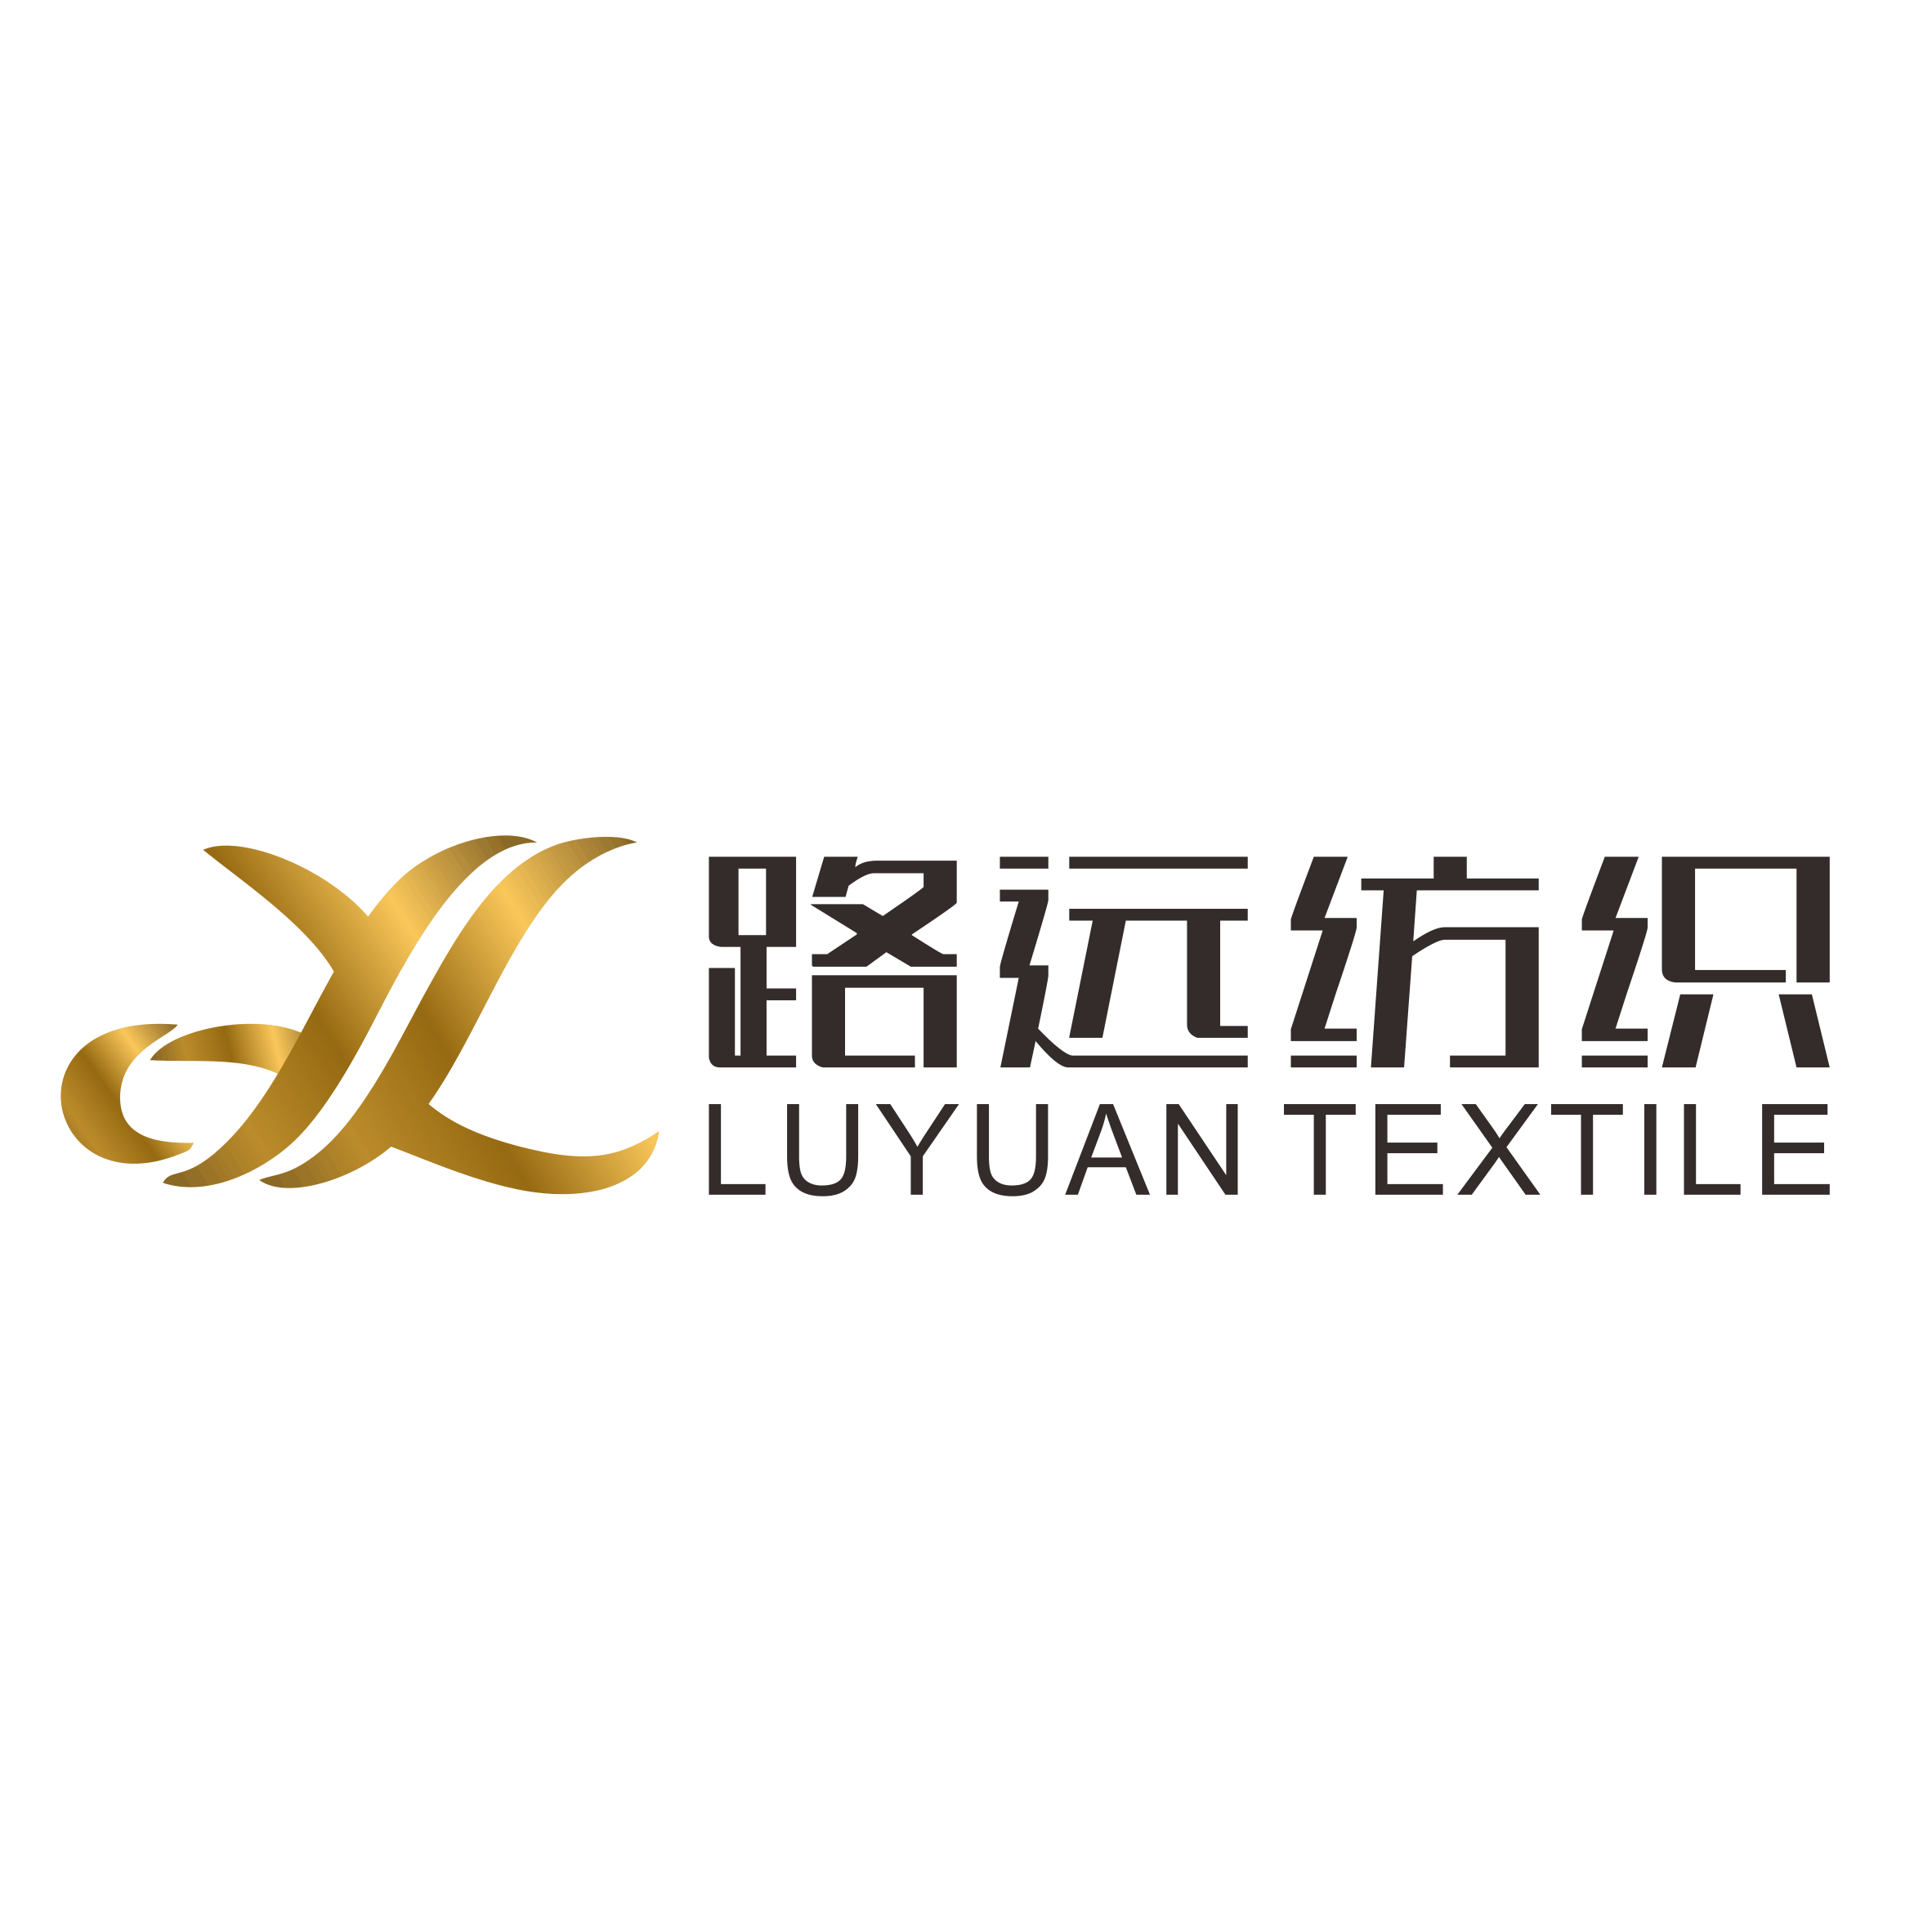 Guangdong Luyuan Textile Co., Ltd